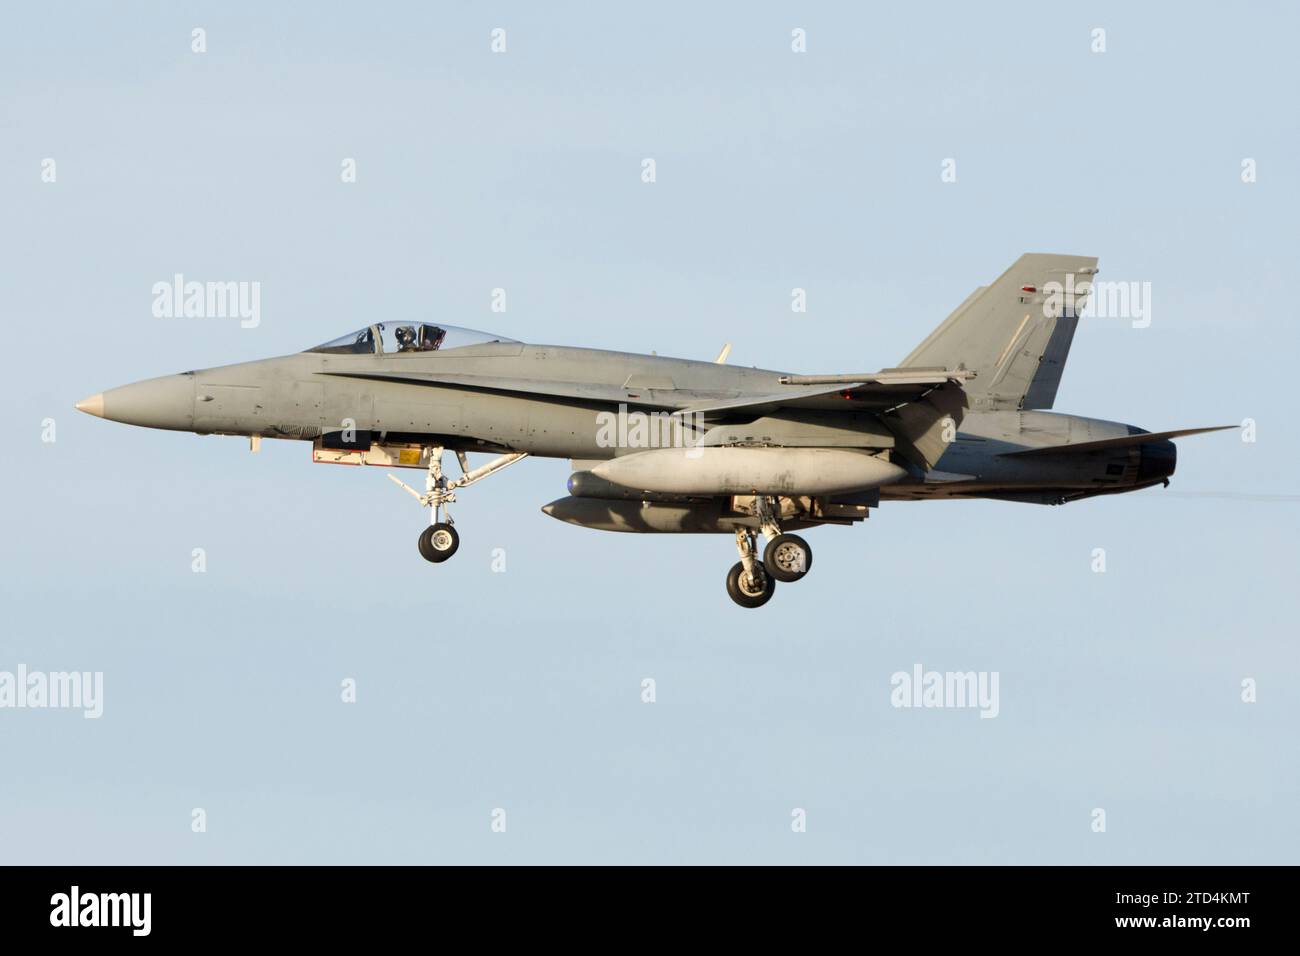 F-18 fighter plane landing at sunset Stock Photo